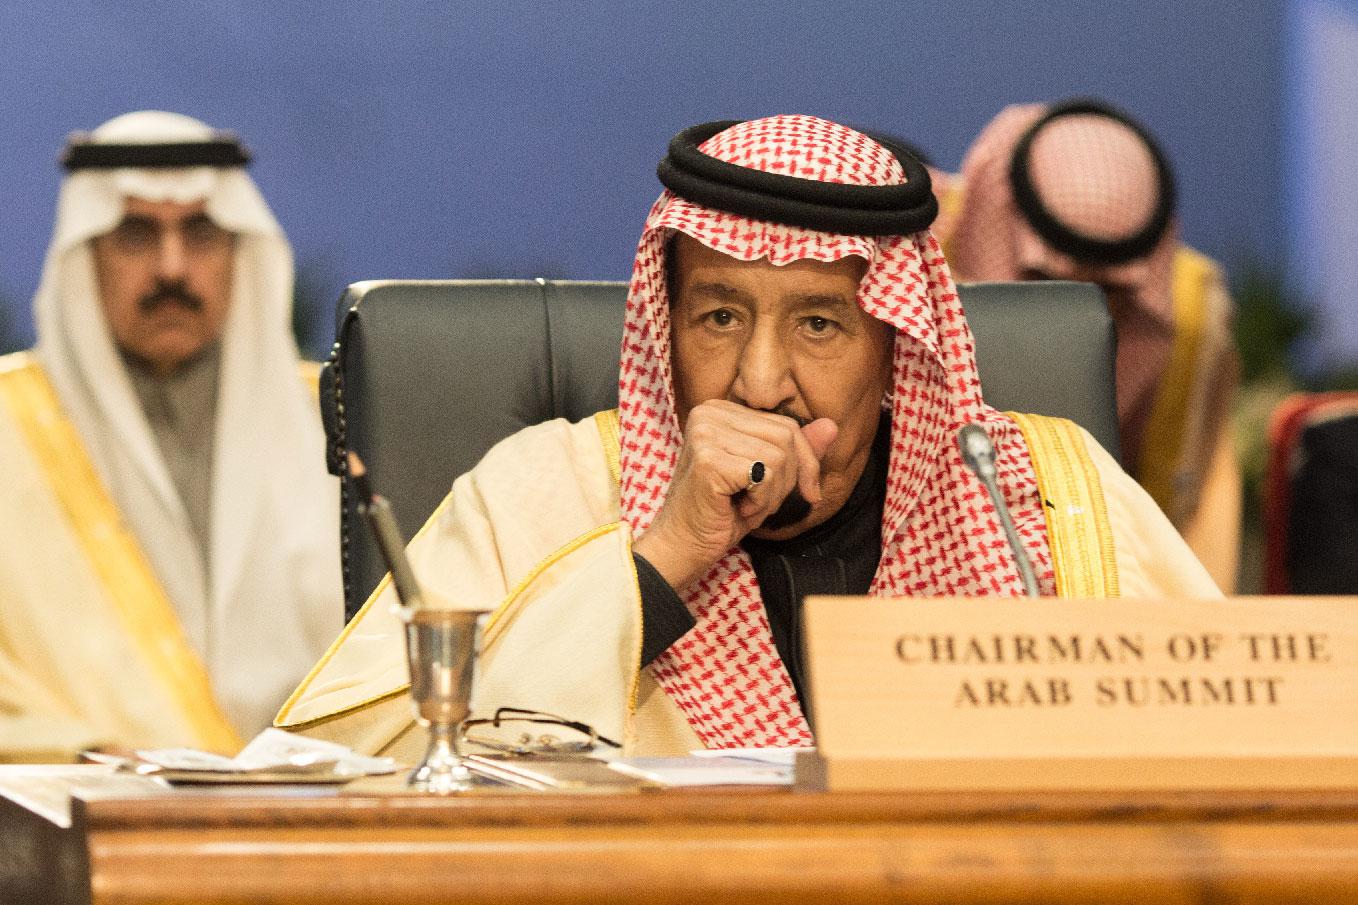 24 February 2019, Egypt, Sharm El-Sheikh: Saudi King Salman bin Abdulaziz Al Saud attends the first plenary session of the European Union (EU) and League of Arab States (LAS) summit at the Sharm El Sheikh convention center.